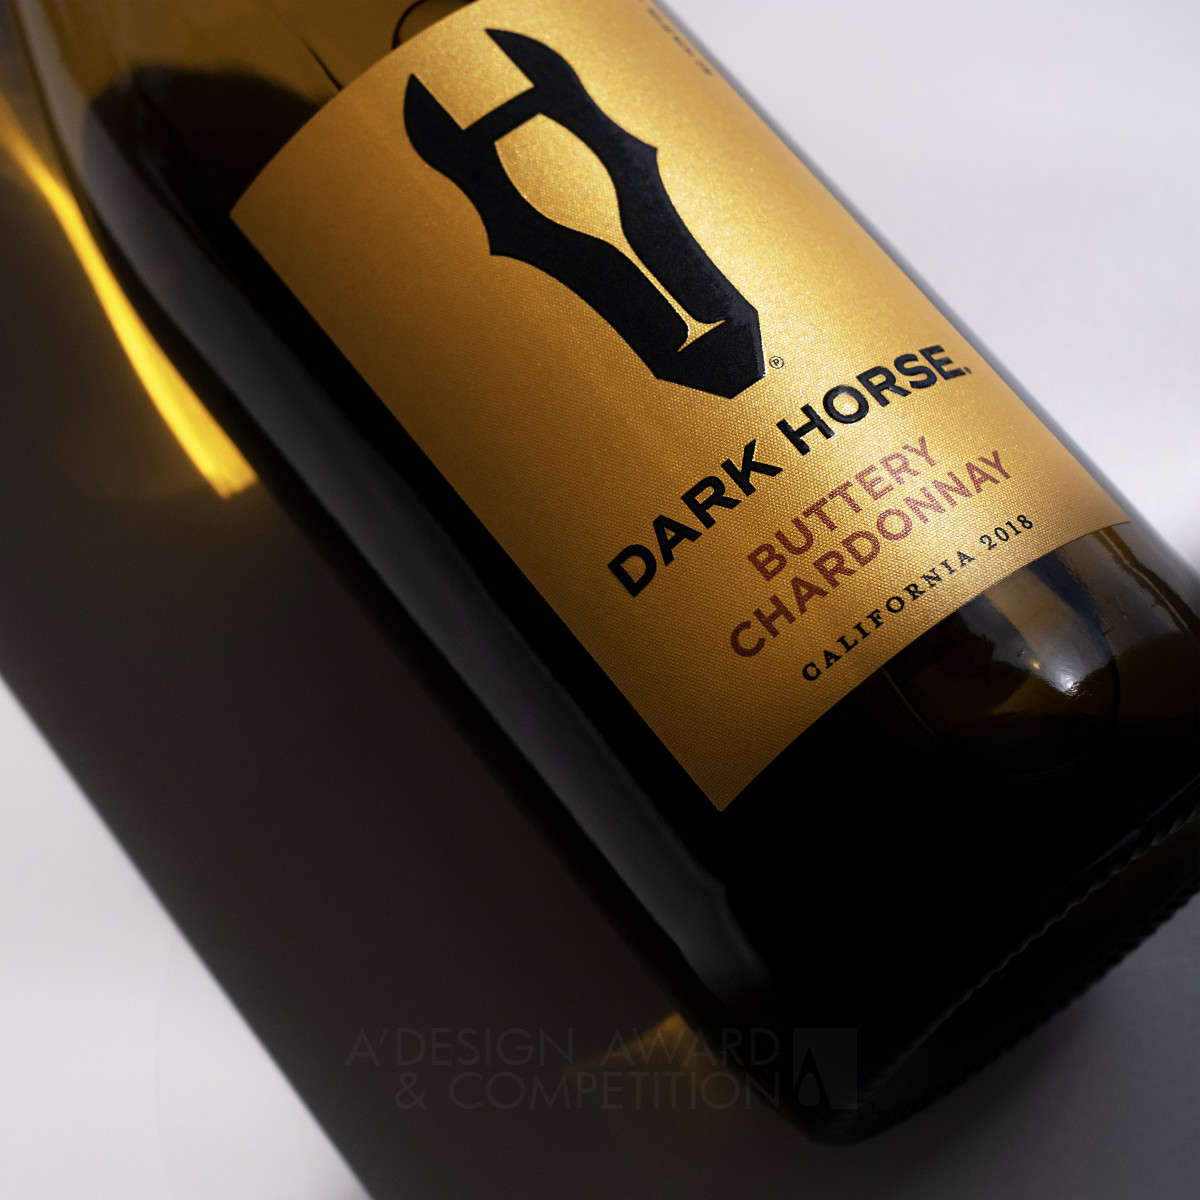 Dark Horse Wine Branding and Redesign